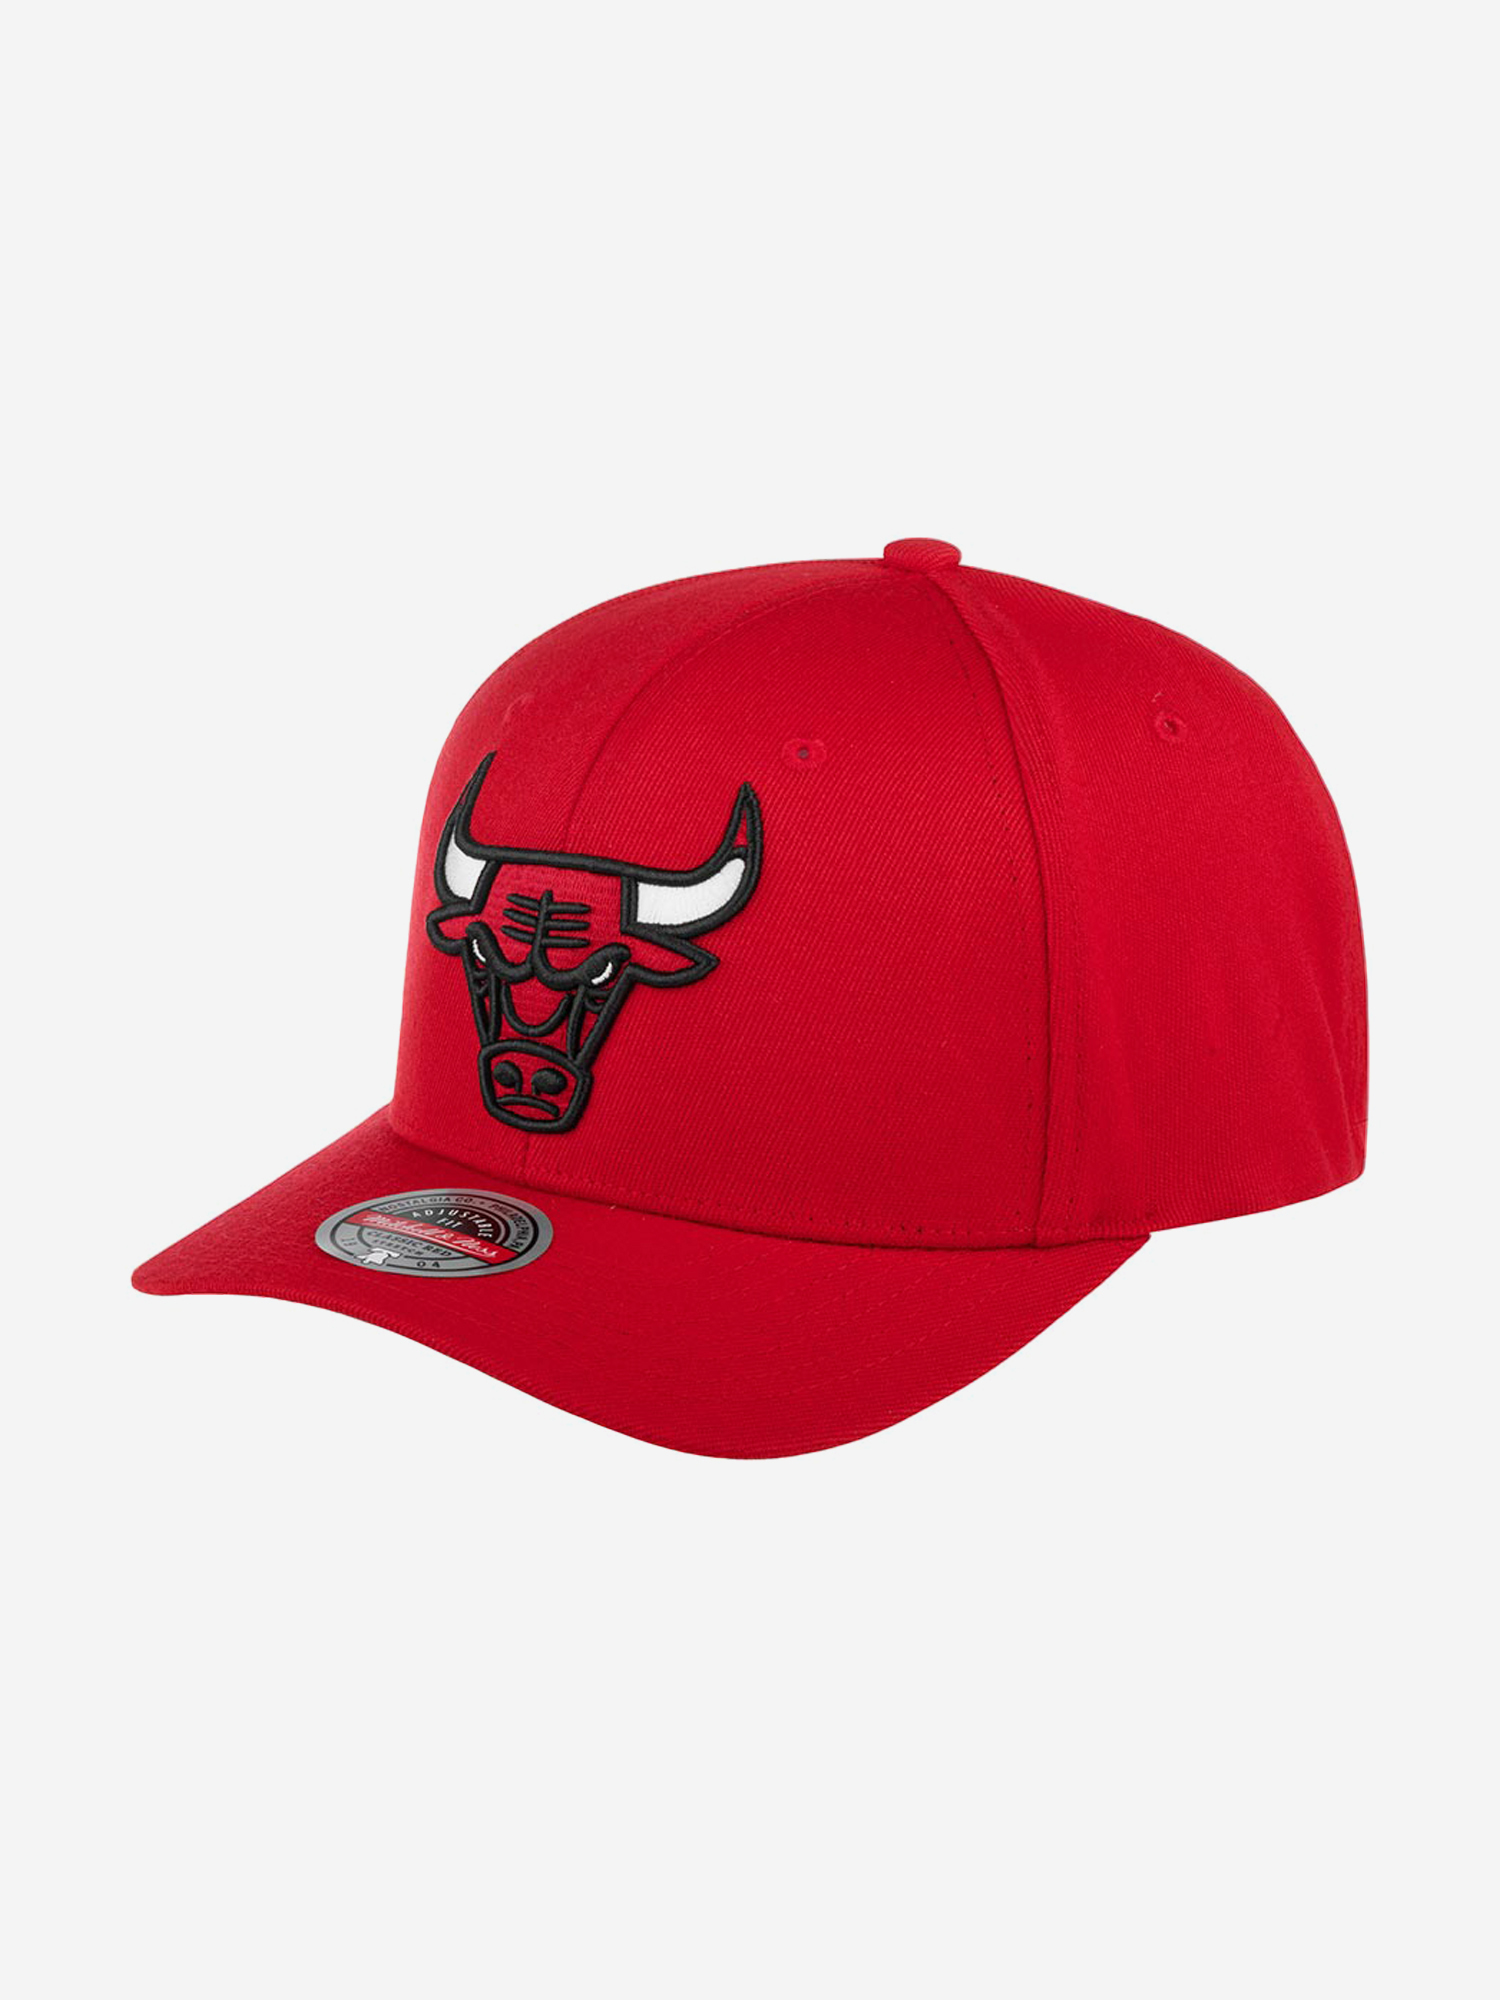 Бейсболка MITCHELL NESS HHSS3257-CBUYYPPPRED1 Chicago Bulls NBA (красный), Красный